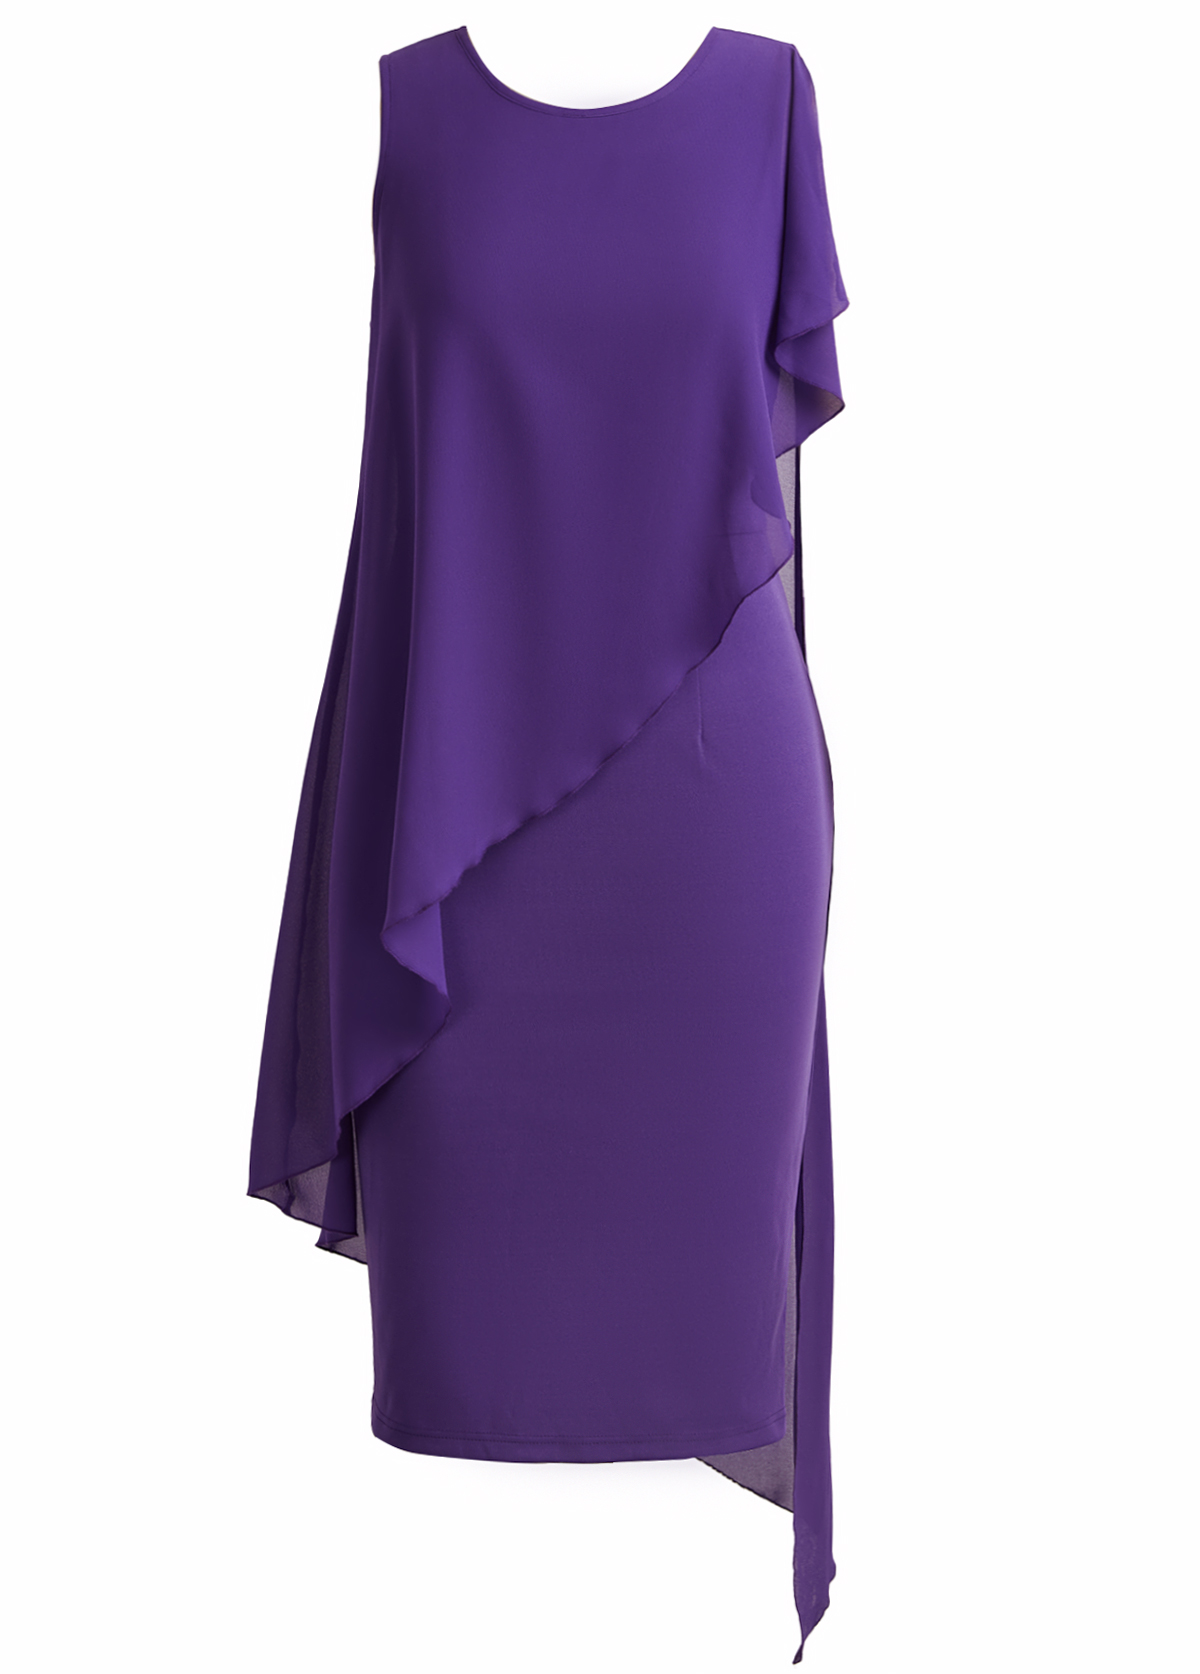 Patchwork Purple High Low Sleeveless Round Neck Bodycon Dress